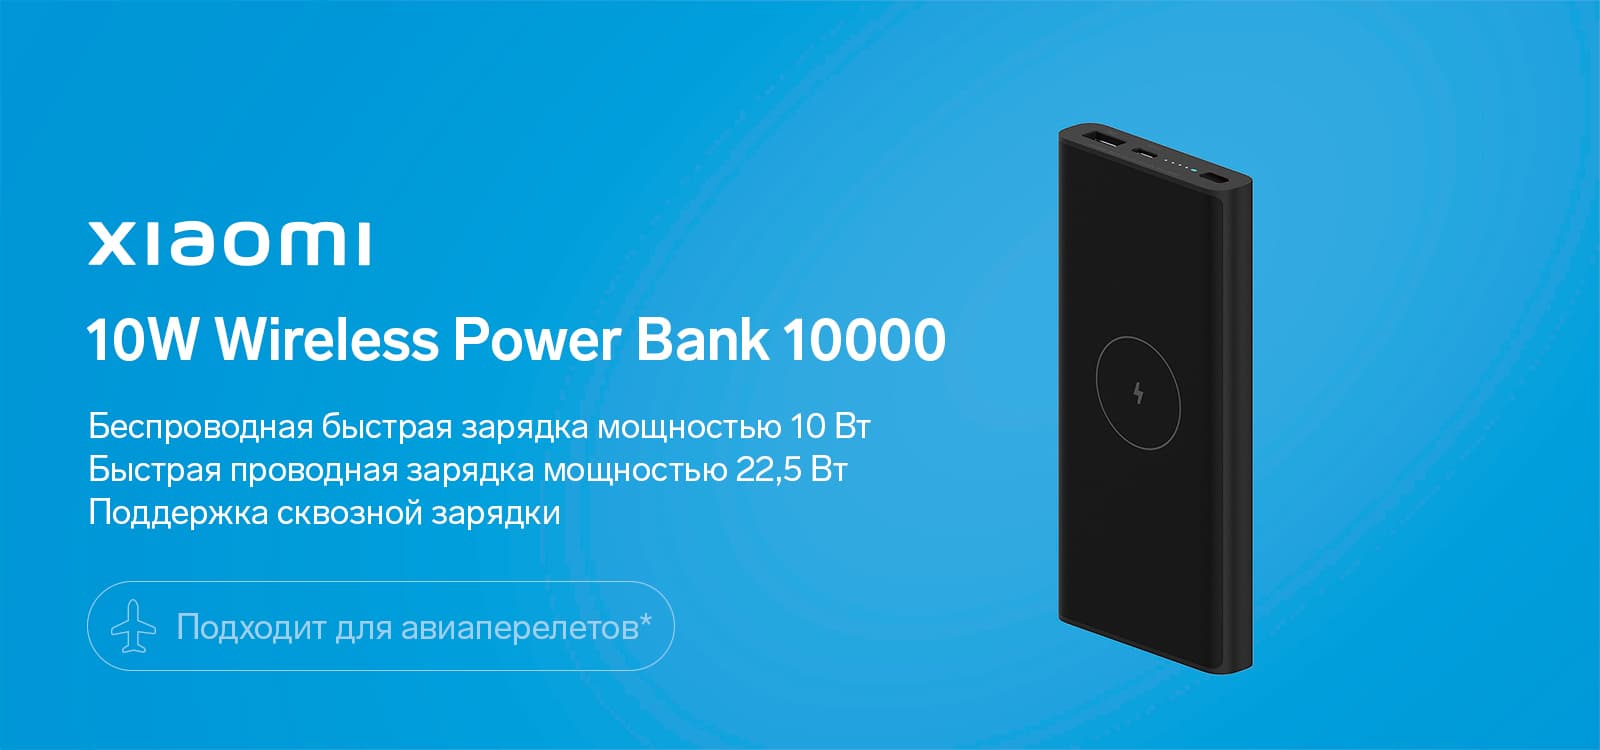 Внешний аккумулятор Xiaomi 10W Wireless Power Bank 10000